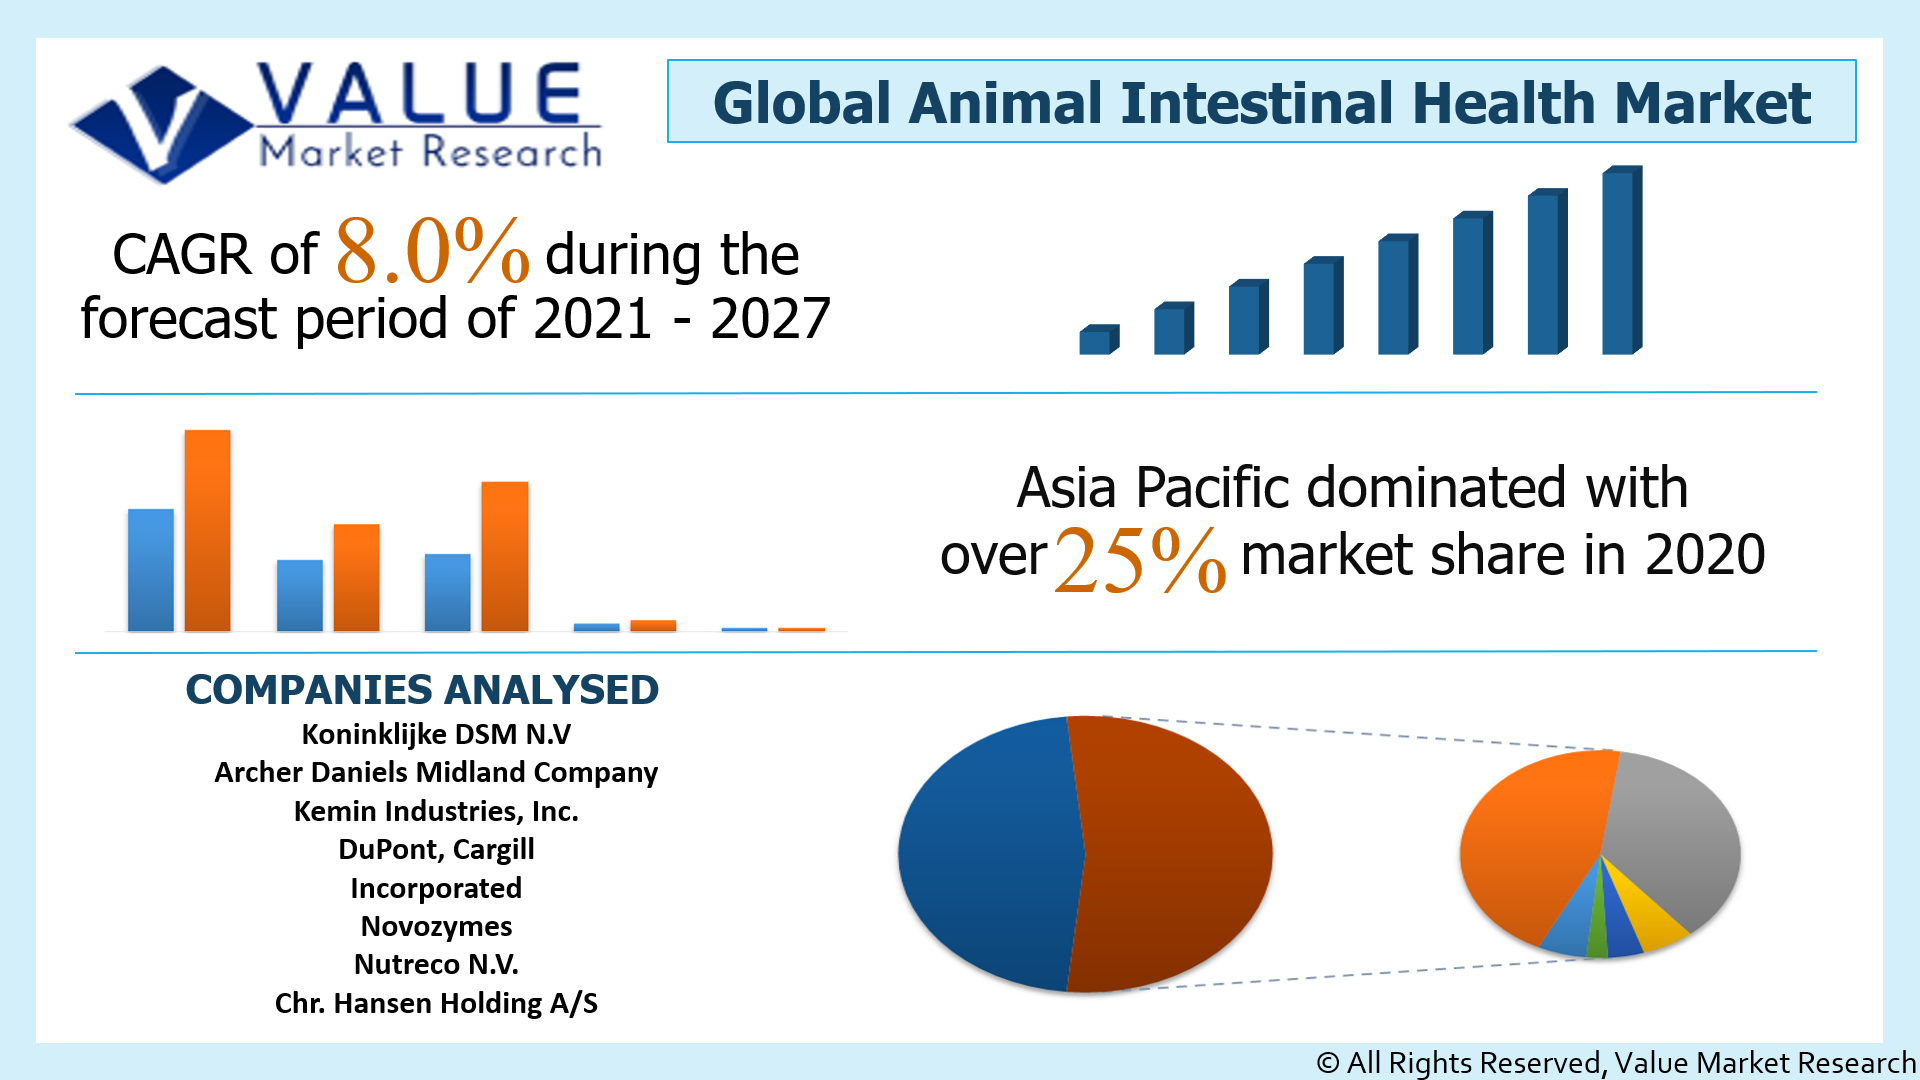 Global Animal Intestinal Health Market Share